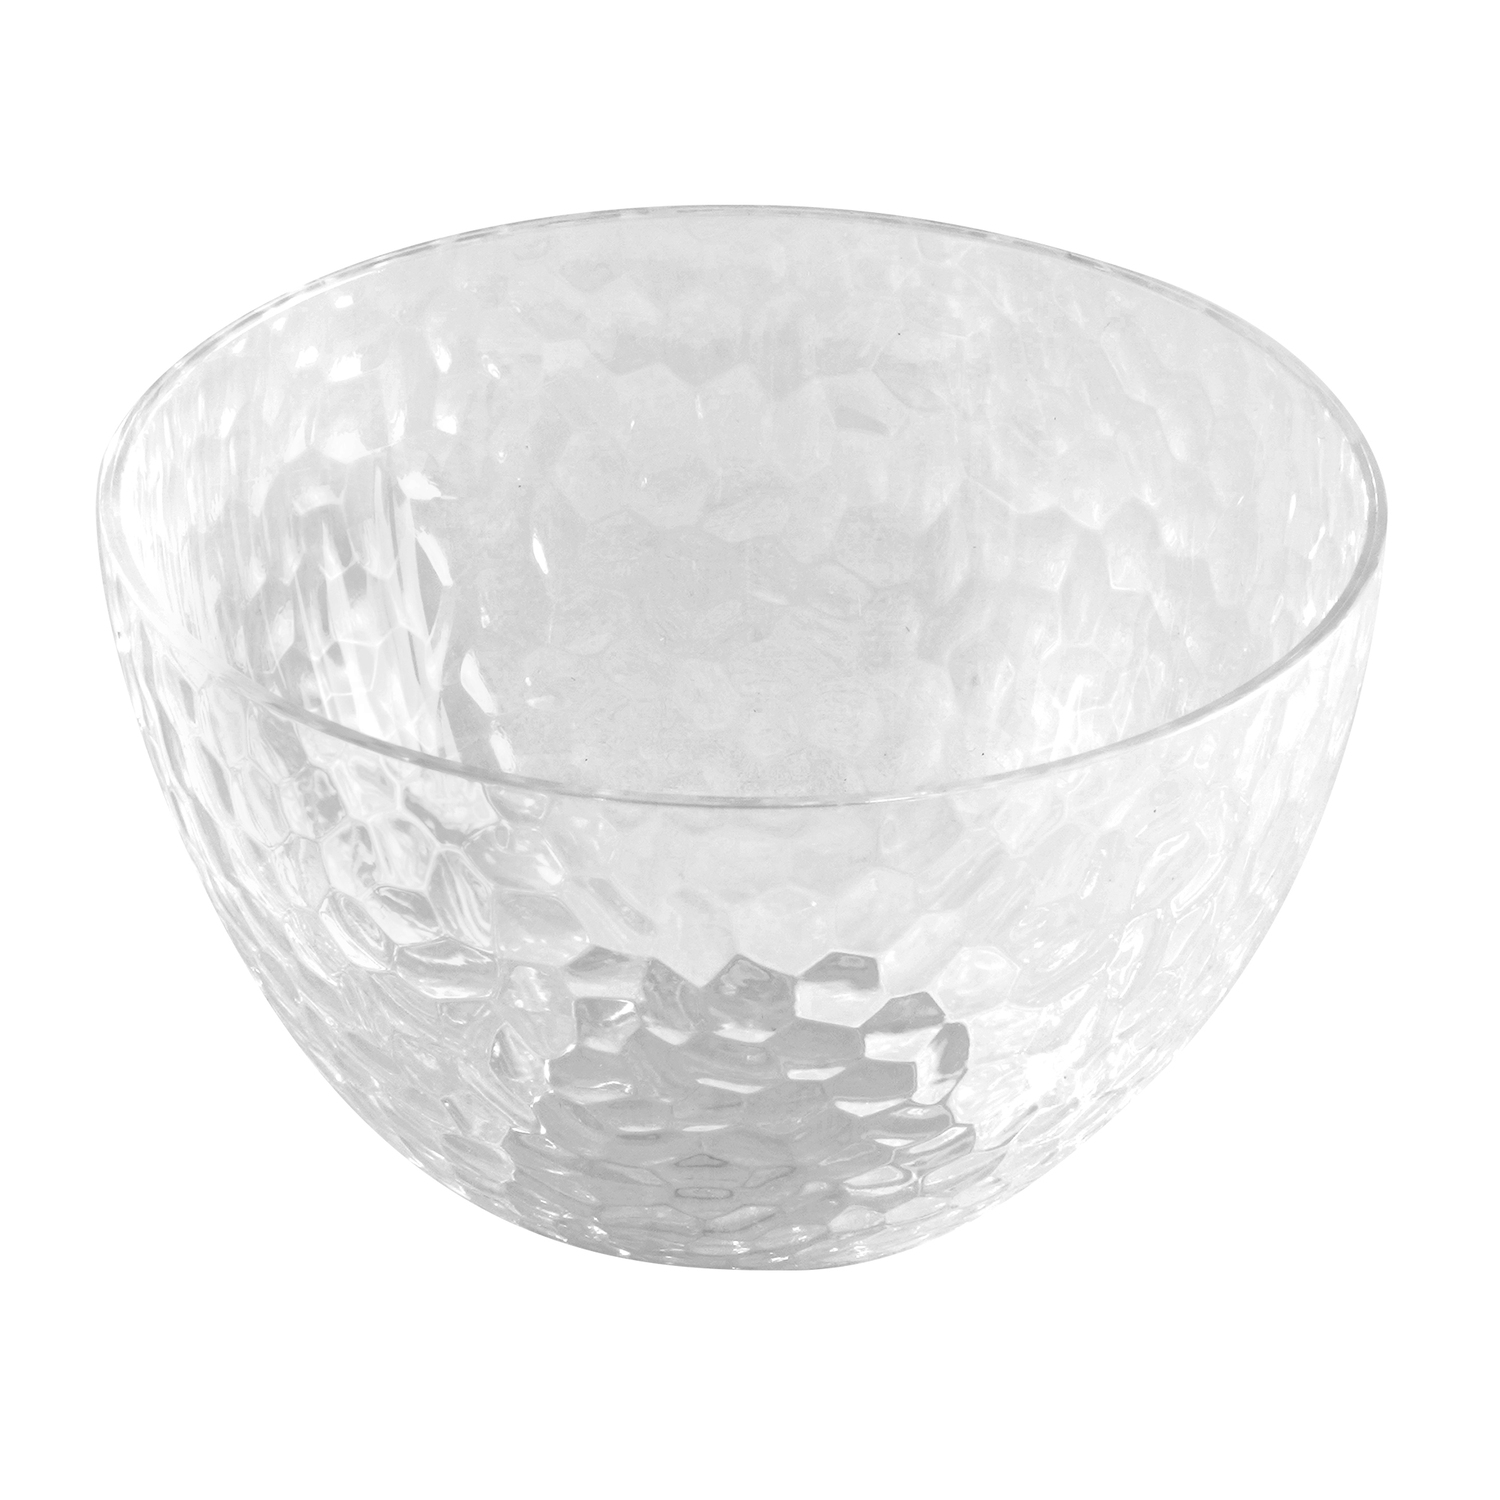 Premium hammered plastic serving bowl, clear, 9.8"